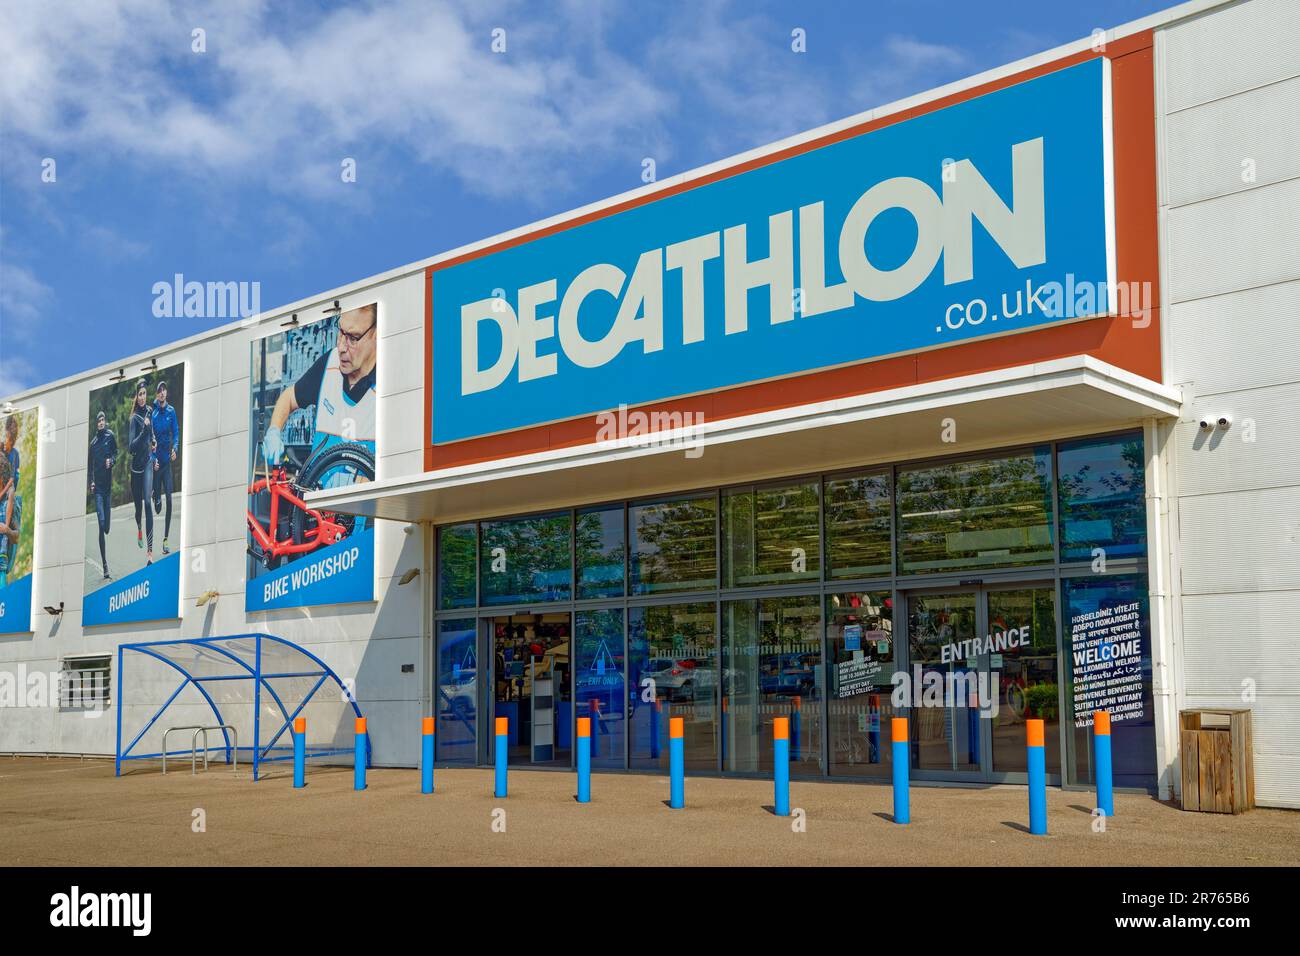 875 Decathlon Store Stock Photos - Free & Royalty-Free Stock